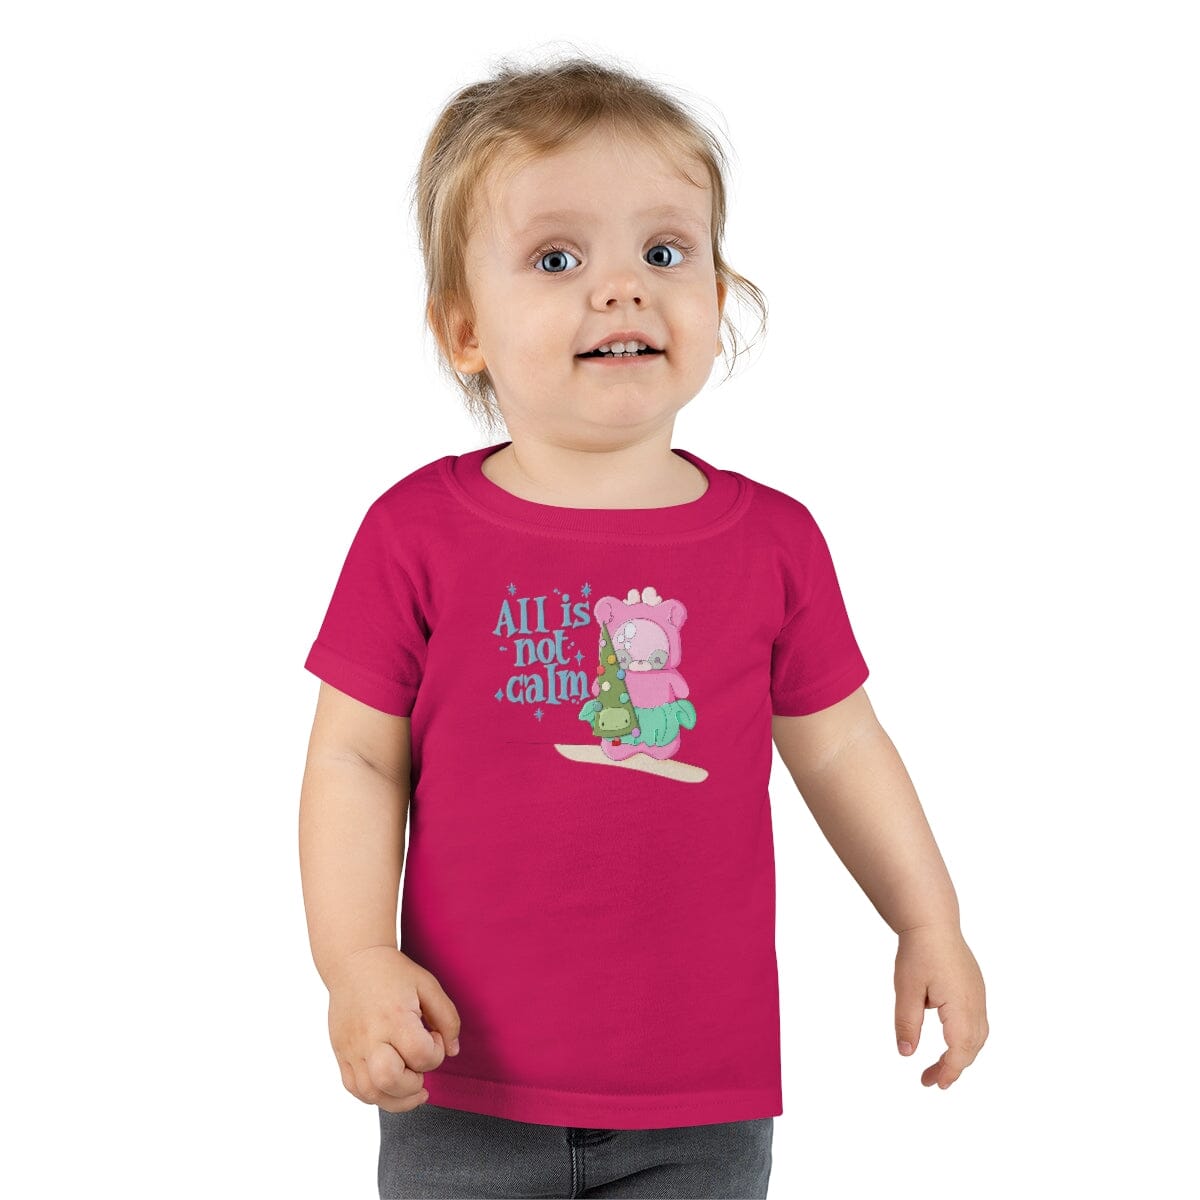 The Ralphie Toddler T-shirt